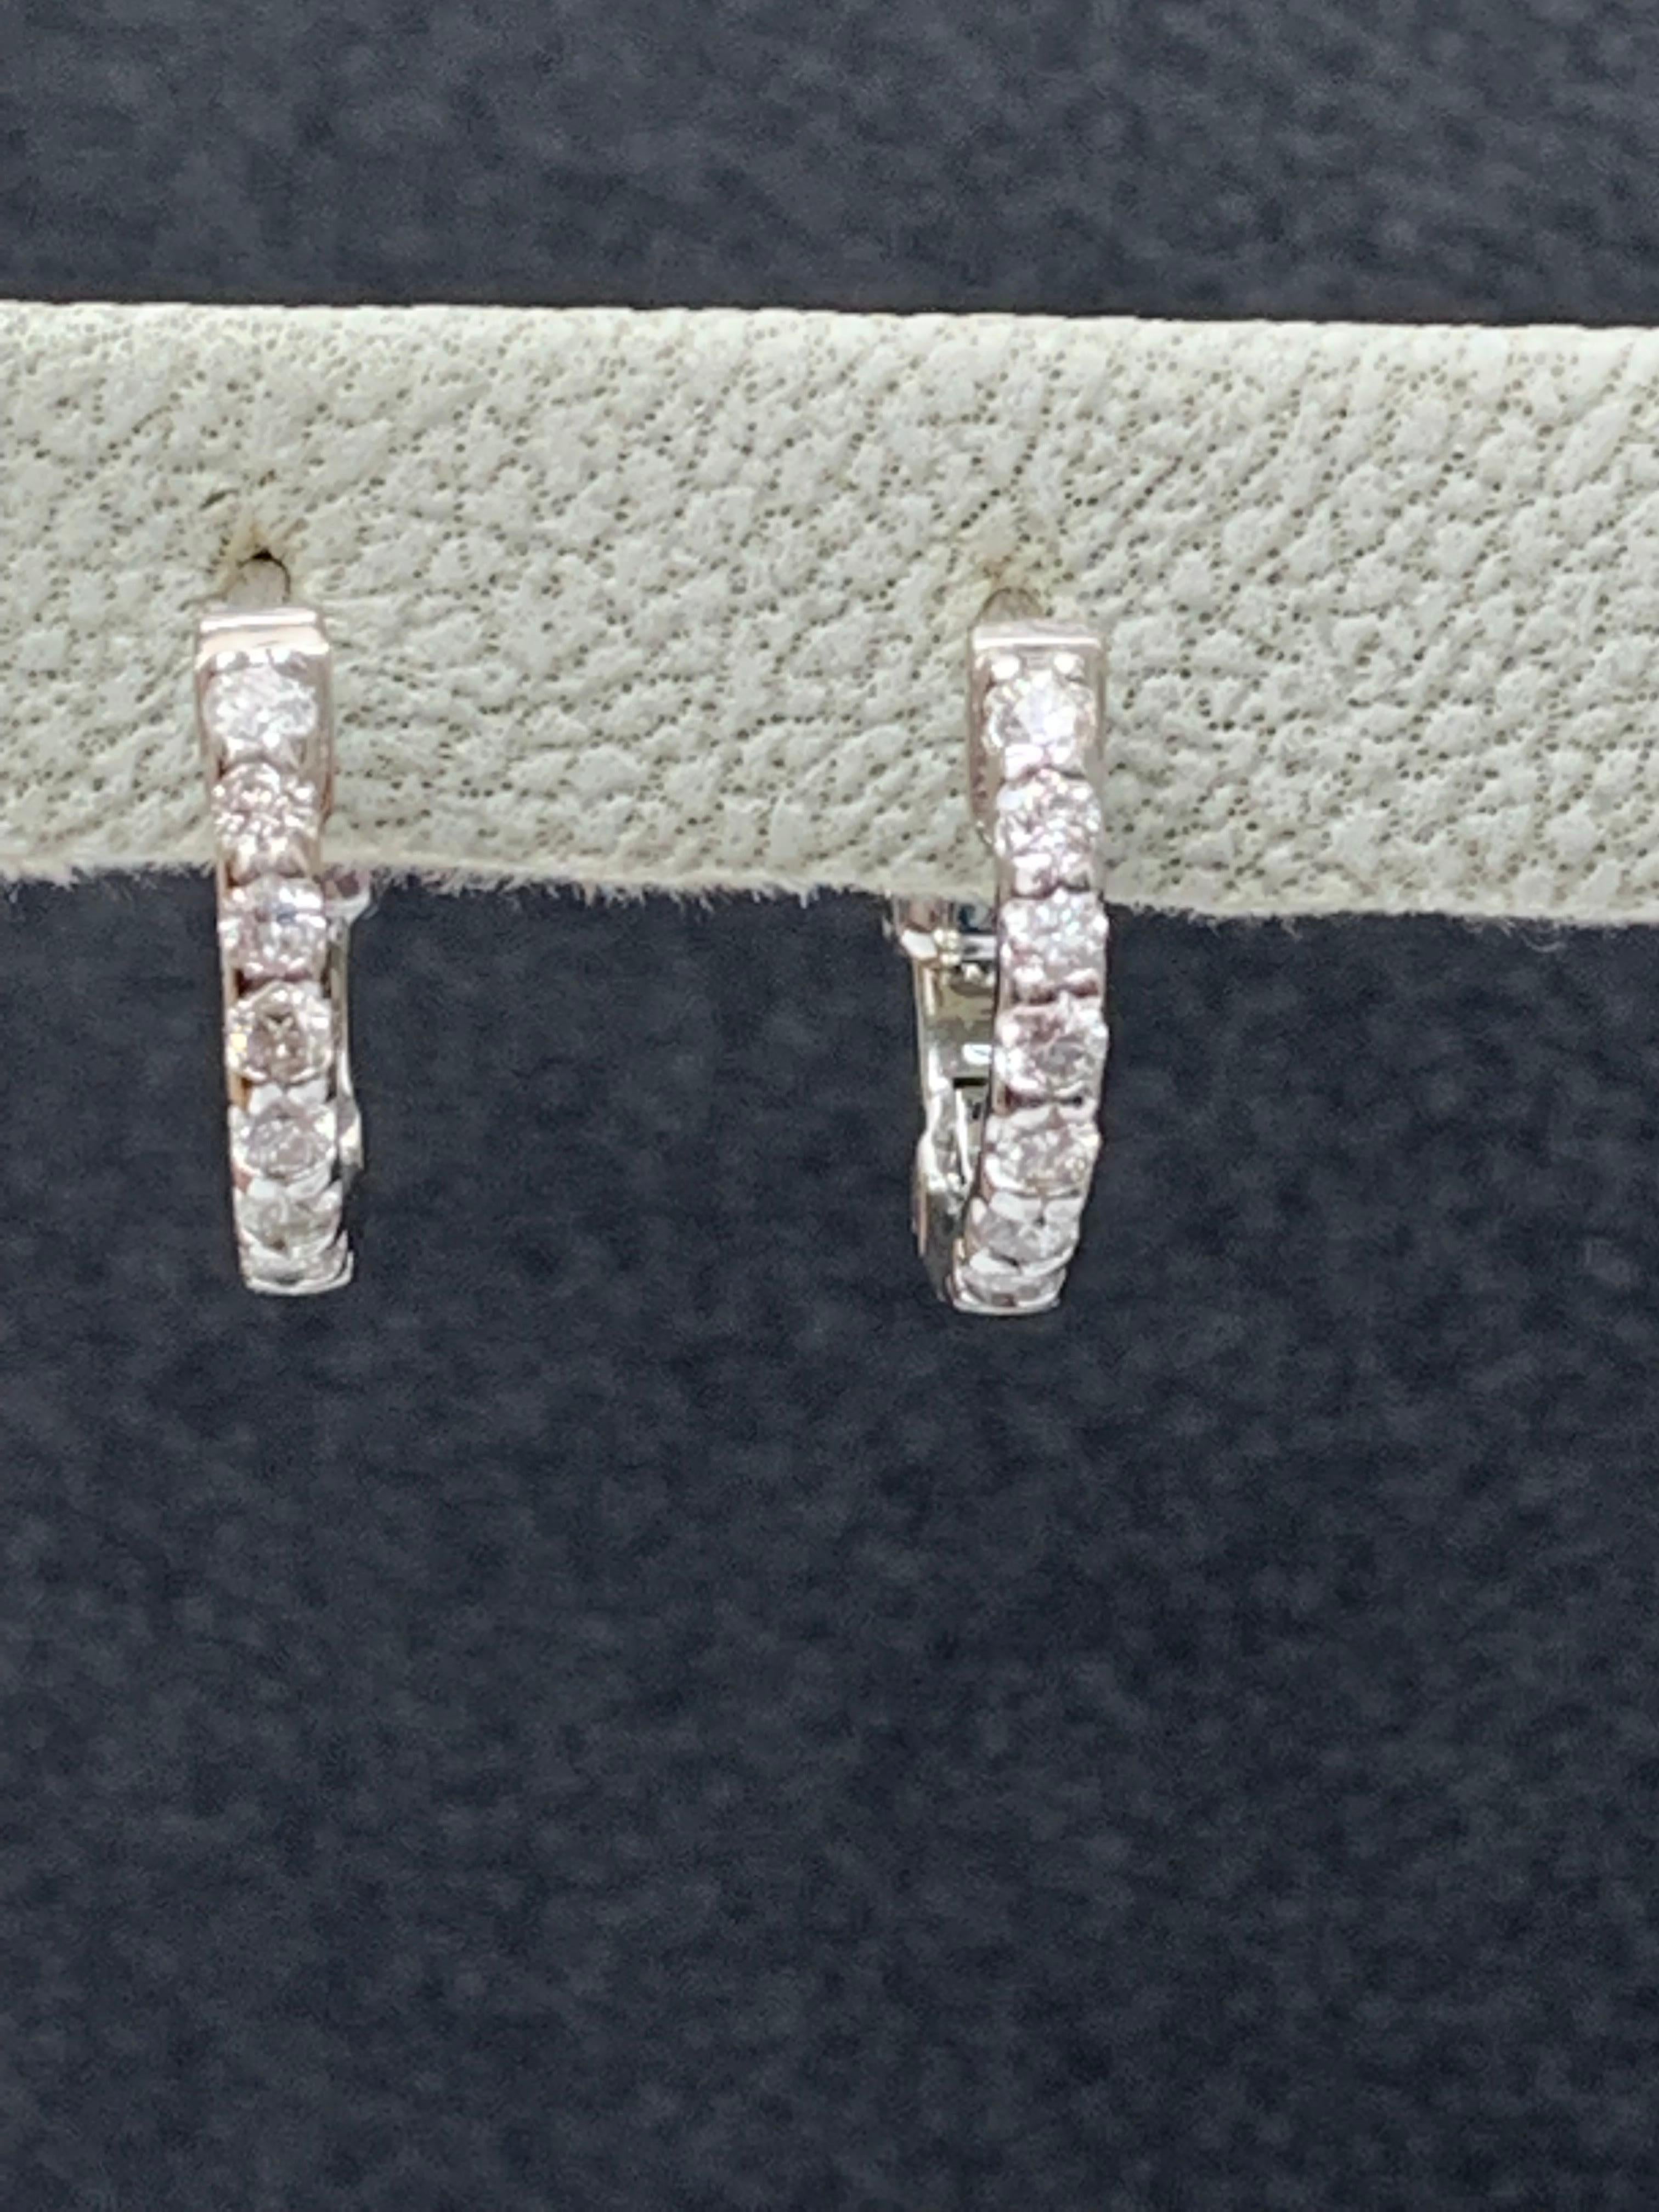 0.25 Carat Diamond Hoop Earrings in 14k White Gold For Sale 2